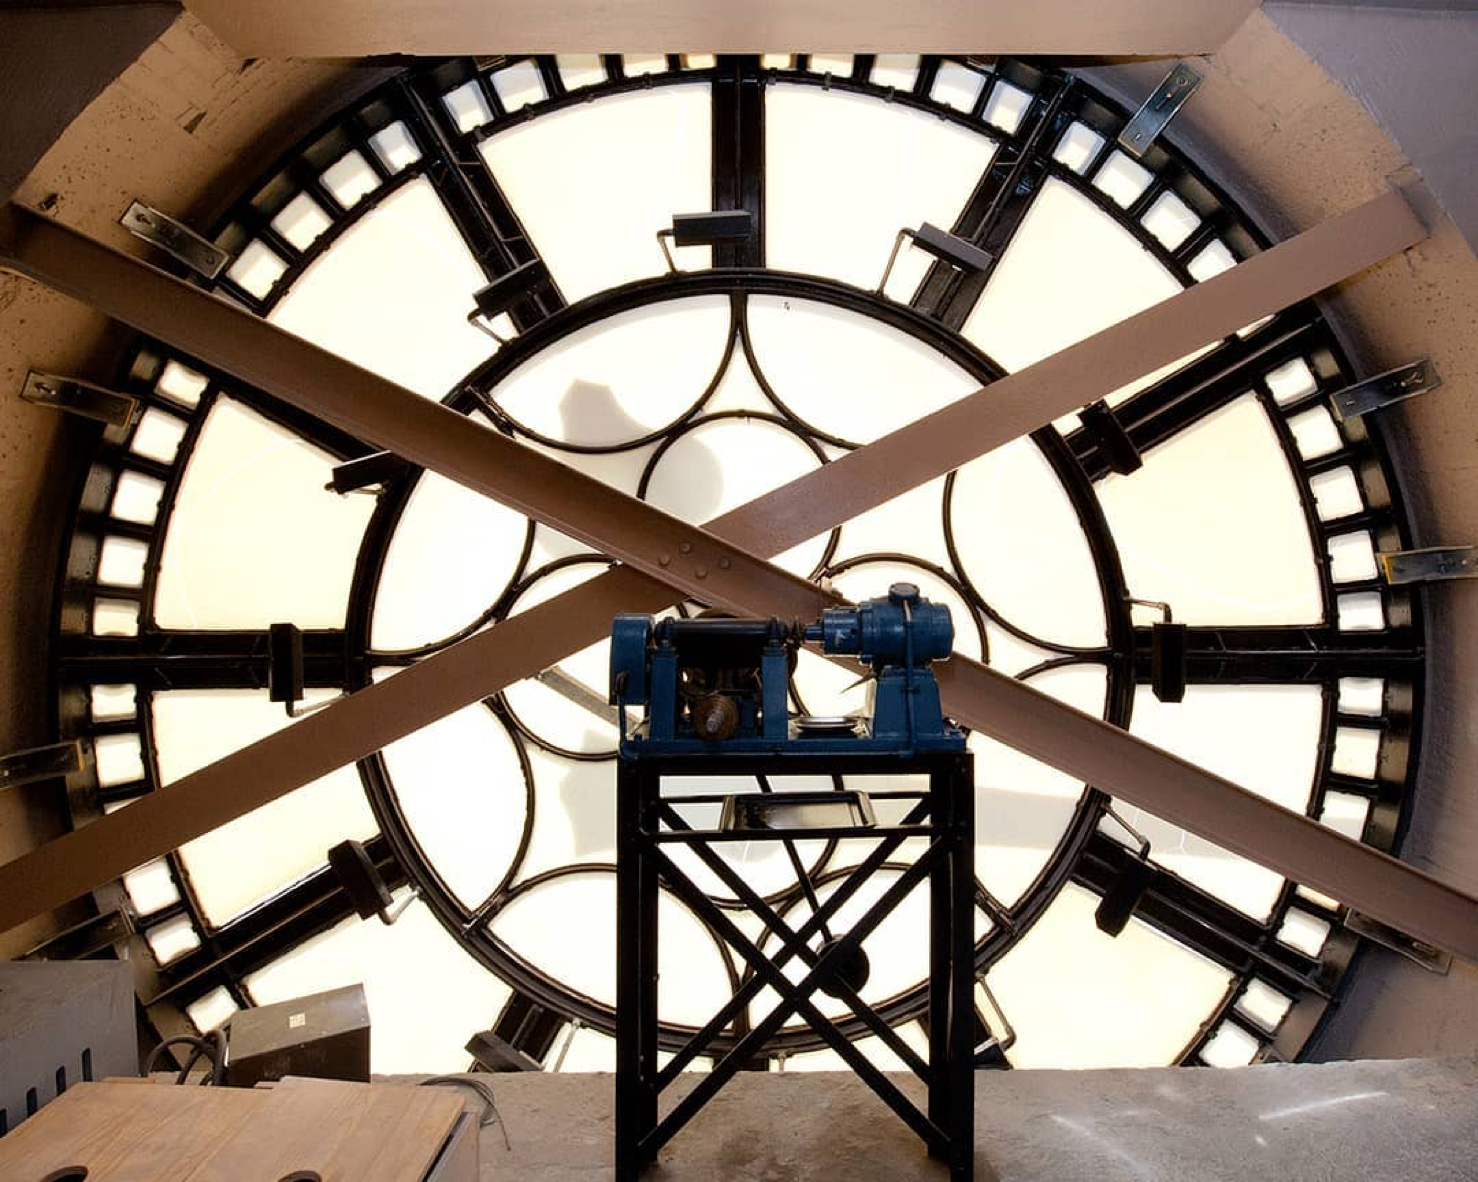 Brisbane City Clock Tower inside mechanism